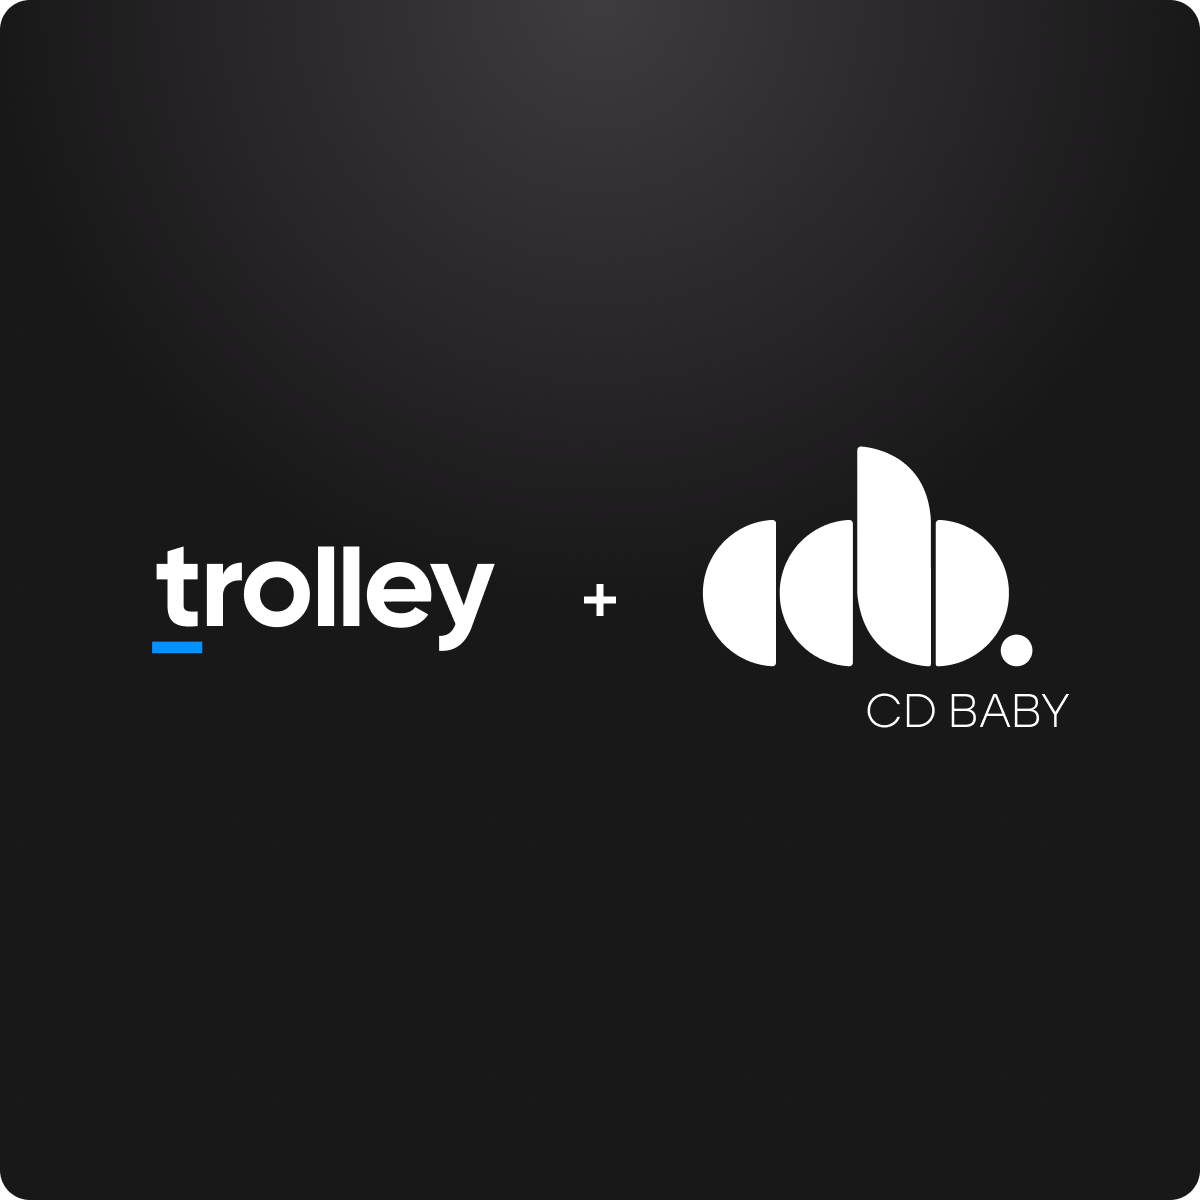 Indie Music Leader CD Baby Chooses Trolley as Artist Payout Partner